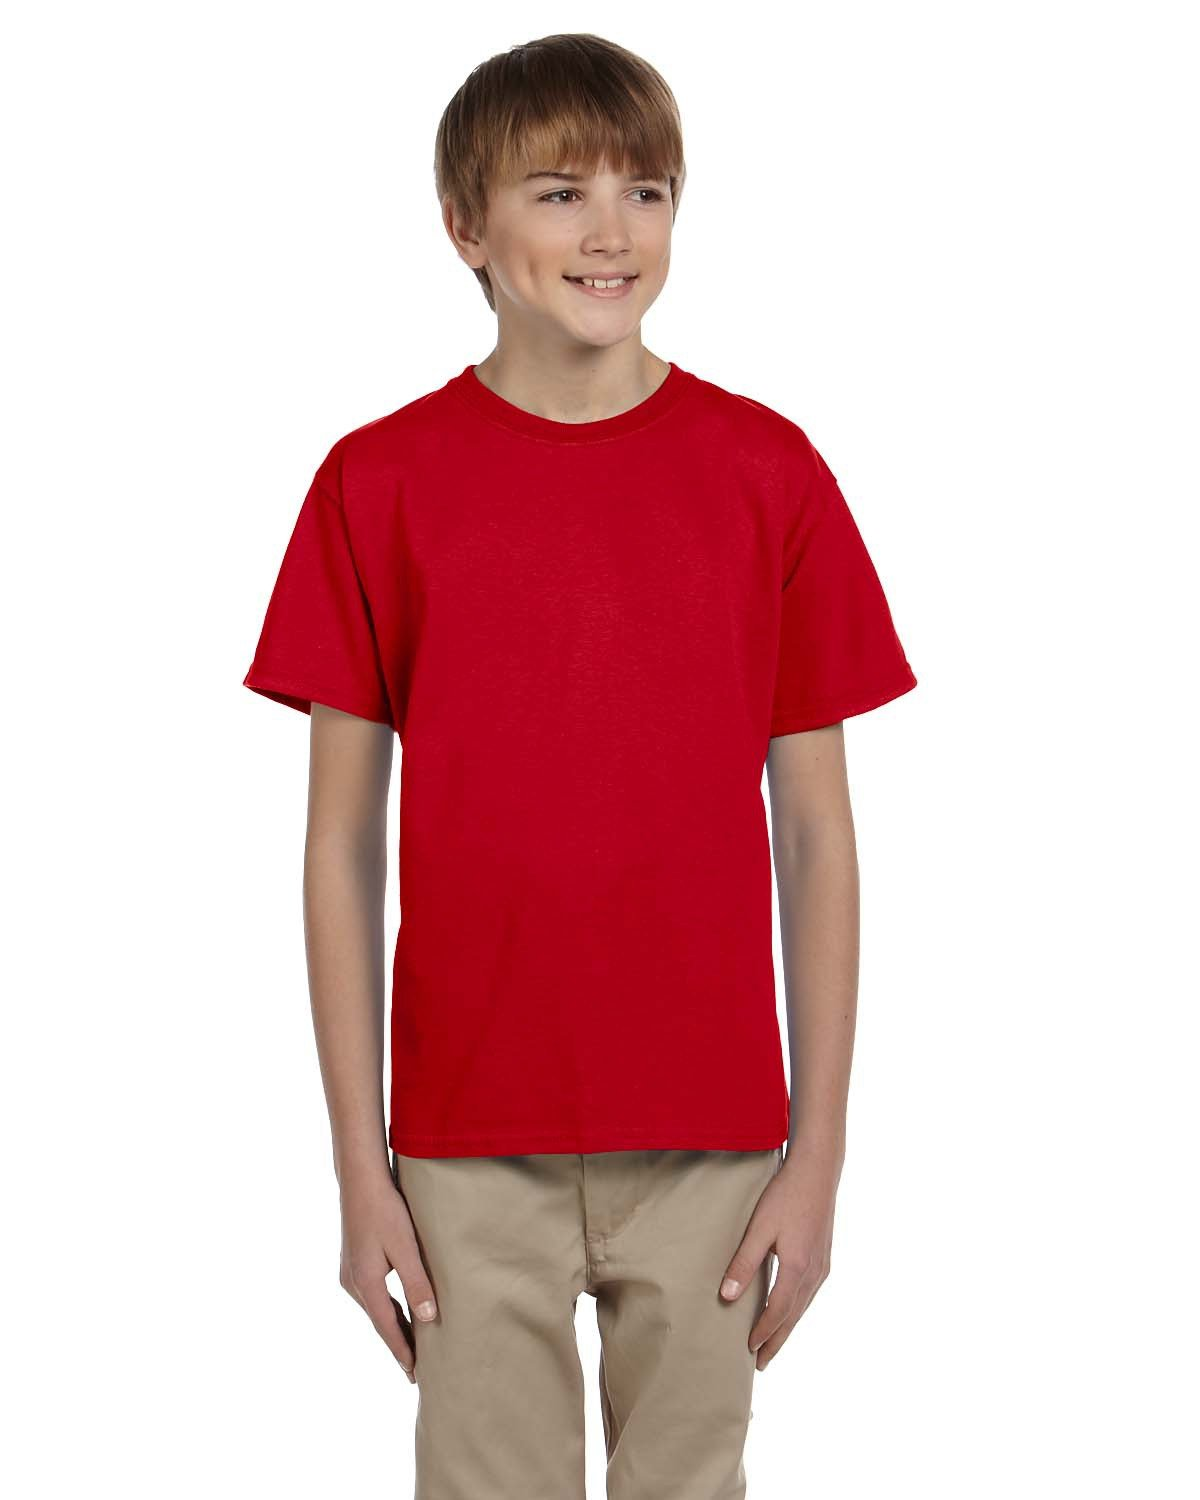 Wholesale Kids Clothes, Youth T Shirts, Tri Blend T Shirts, Plain Blank  T Shirts